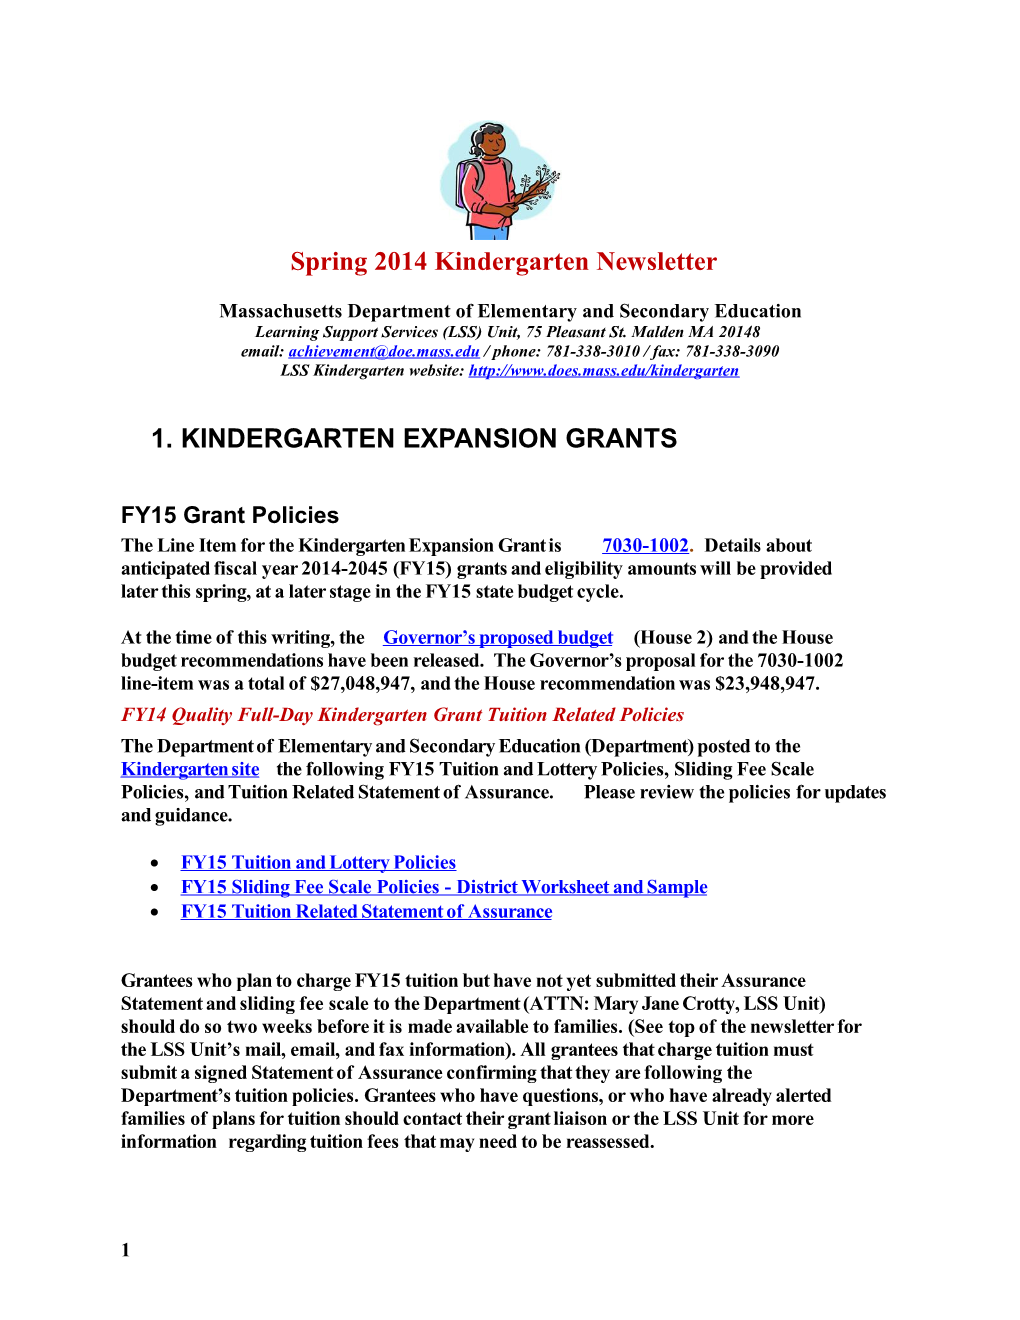 Spring 2014 Full-Day Kindergarten Newsletter - Department of Elementary and Secondary Education